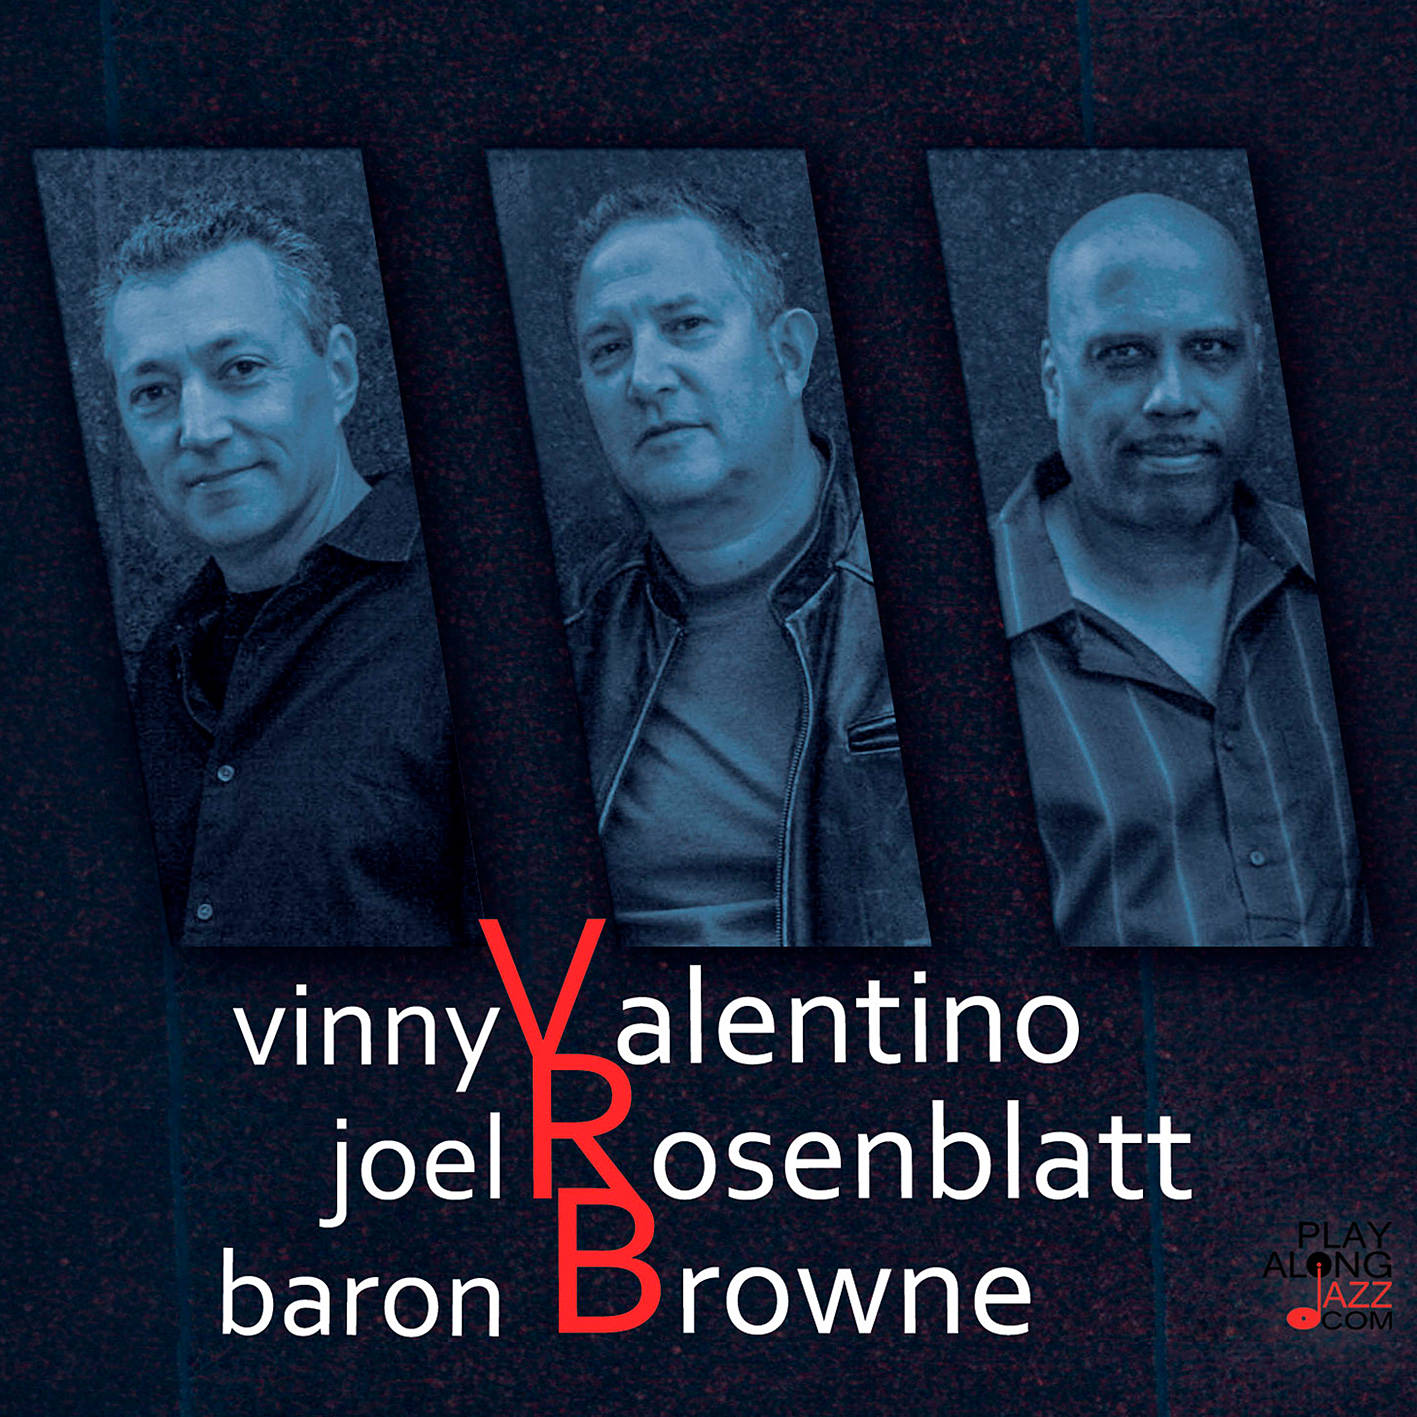 Vinny Valentino, Baron Browne, Joel Rosenblatt – VRB (2018) [HDTracks FLAC 24bit/96kHz]